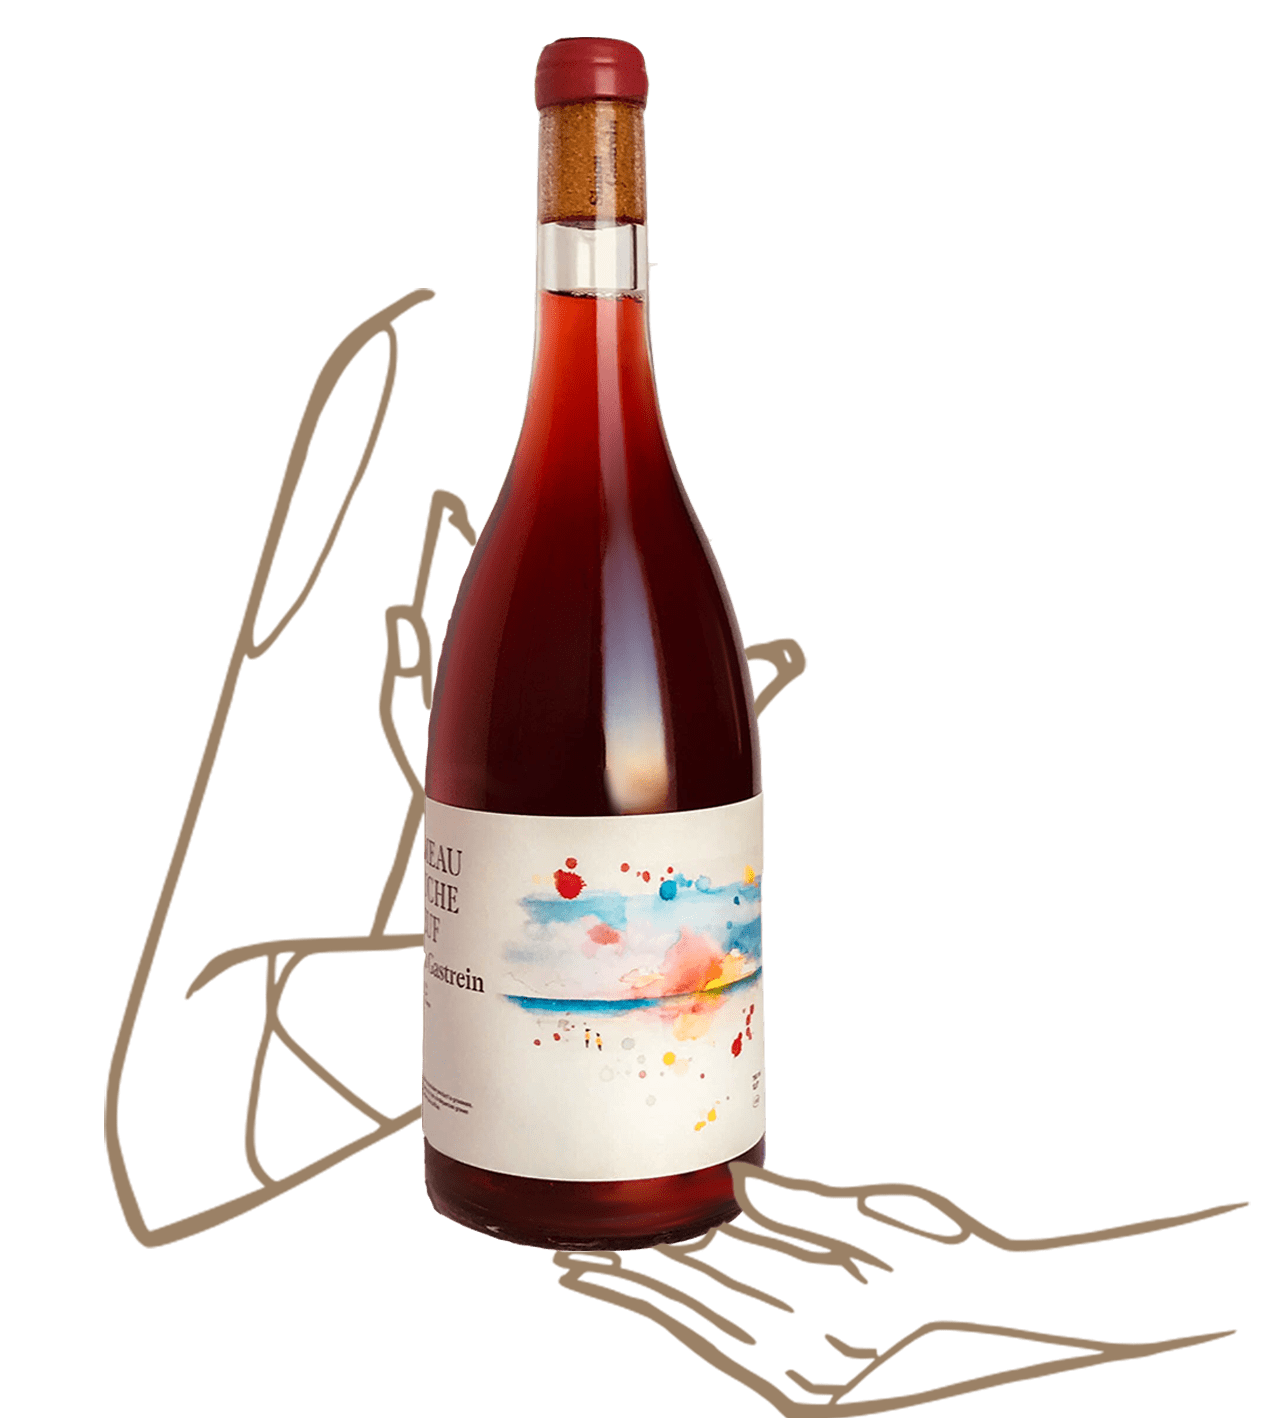 Le Rouget by Hameau toucheboeuf is a natural wine rosé